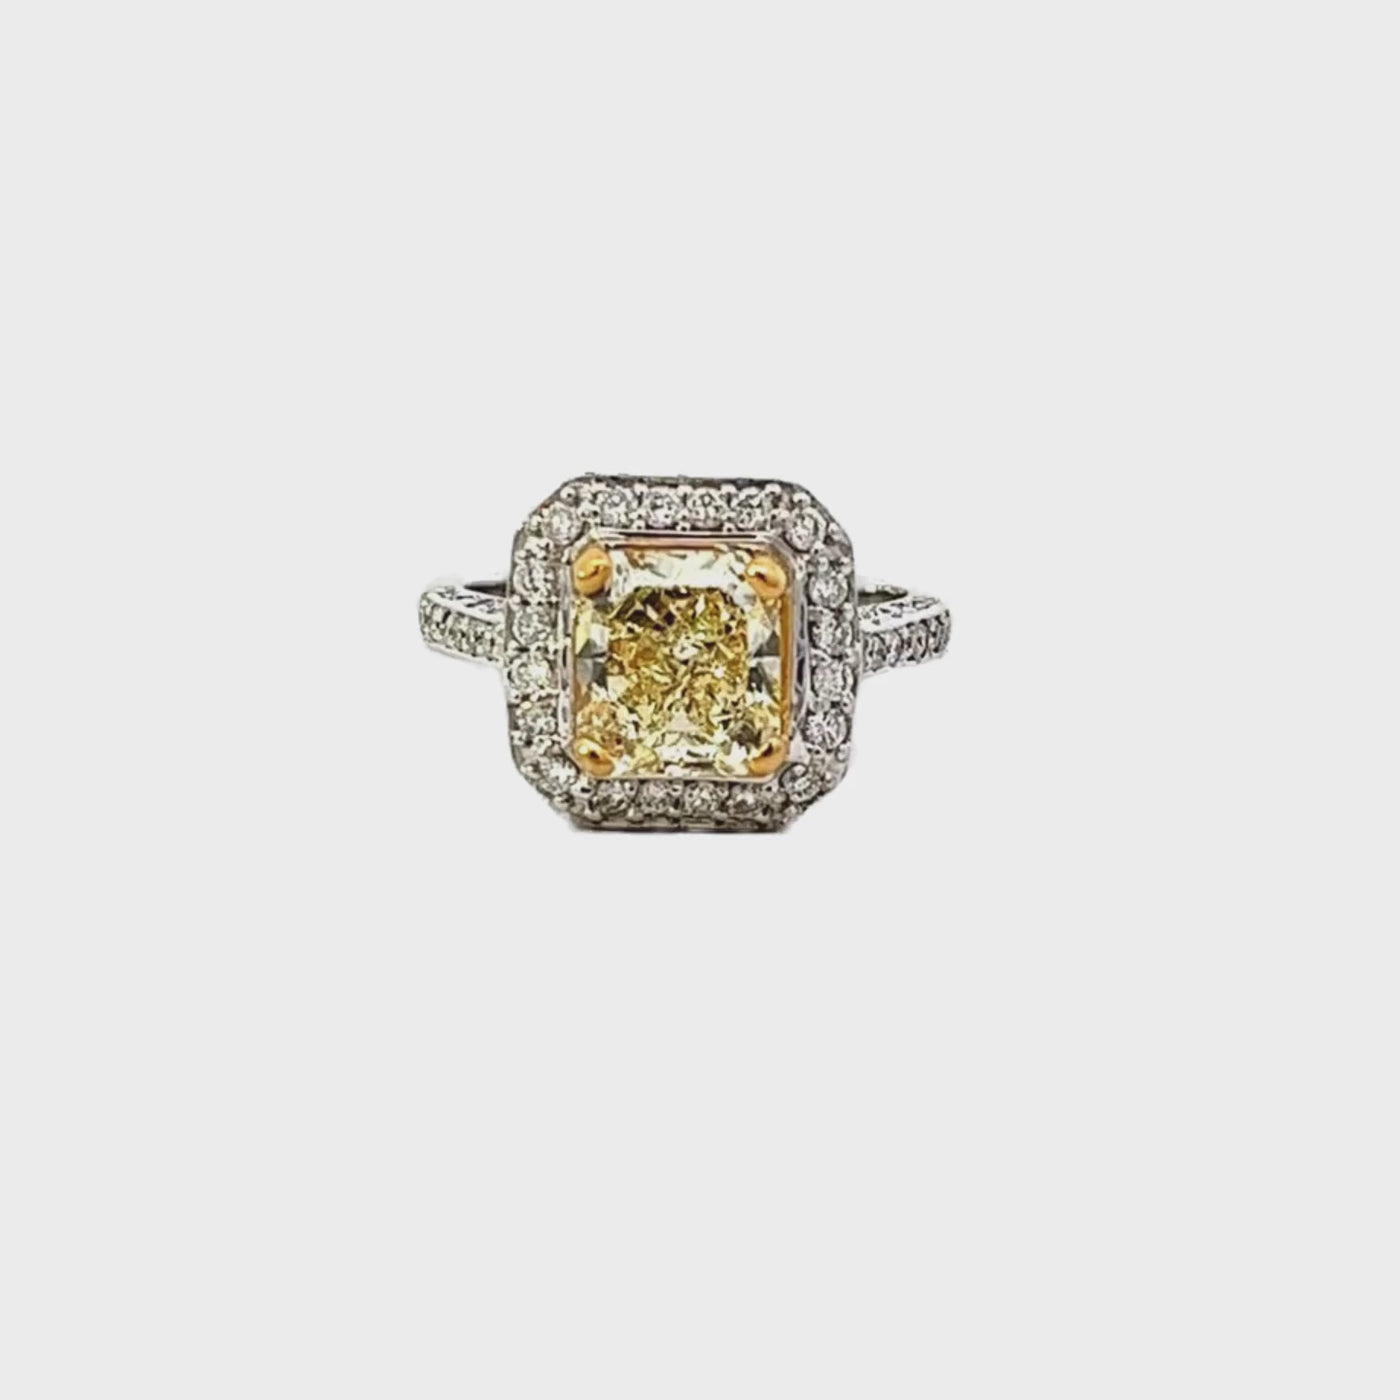 18k Gold Estate 2.54ct Radiant Cut Yellow Diamond Ring